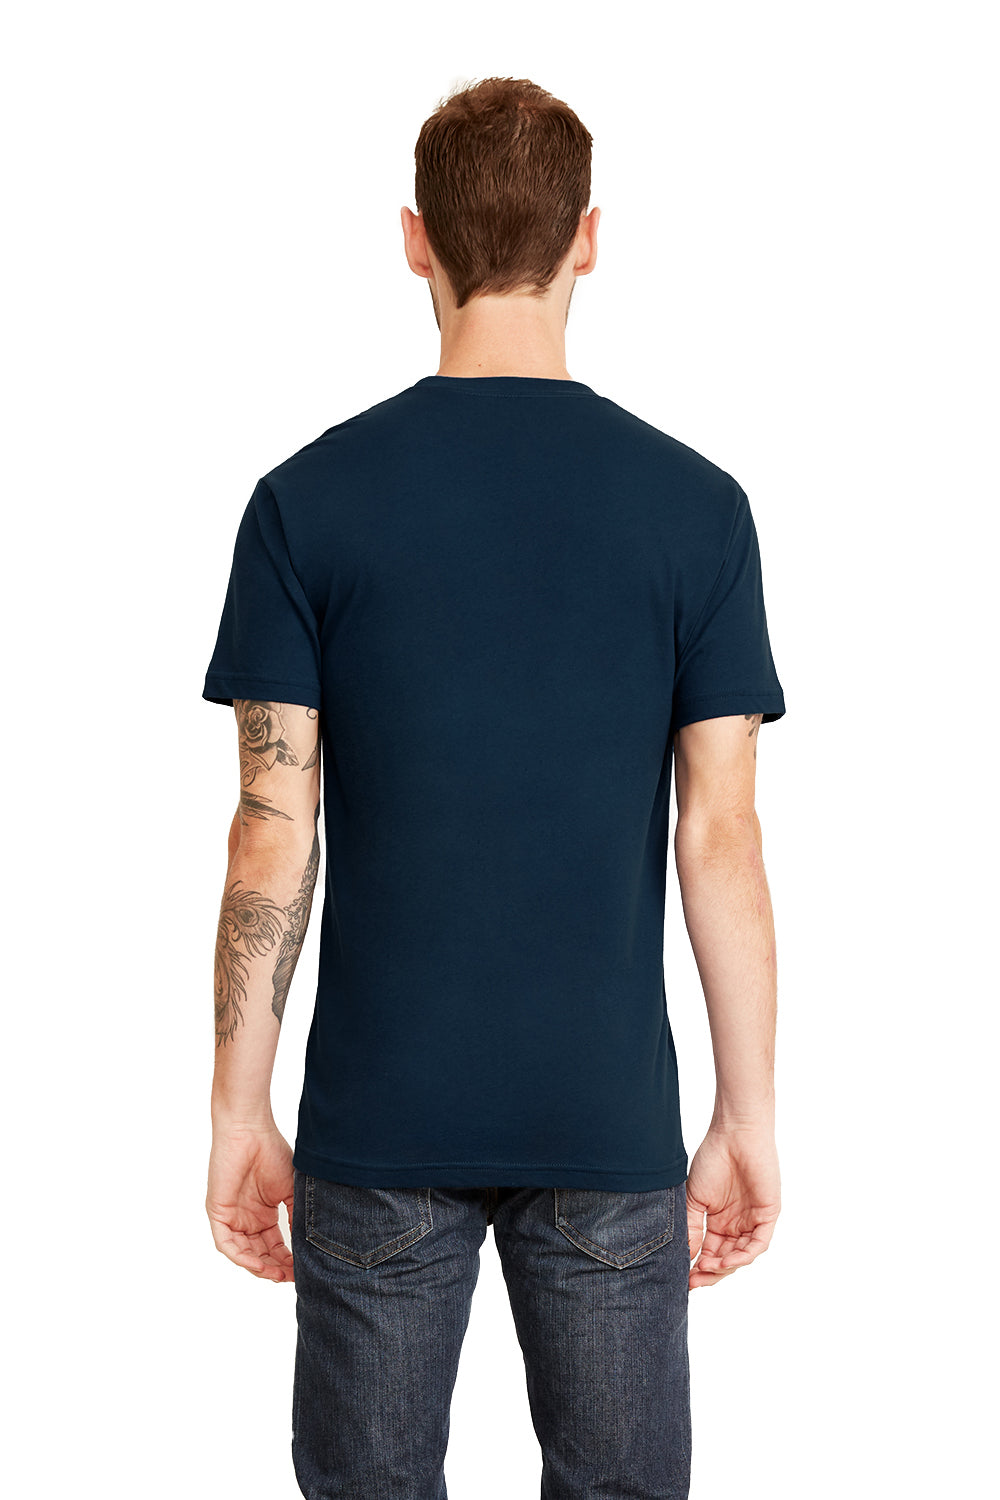 Next Level 3605 Mens Fine Jersey Short Sleeve Crewneck T-Shirt w/ Pocket Navy Blue Back